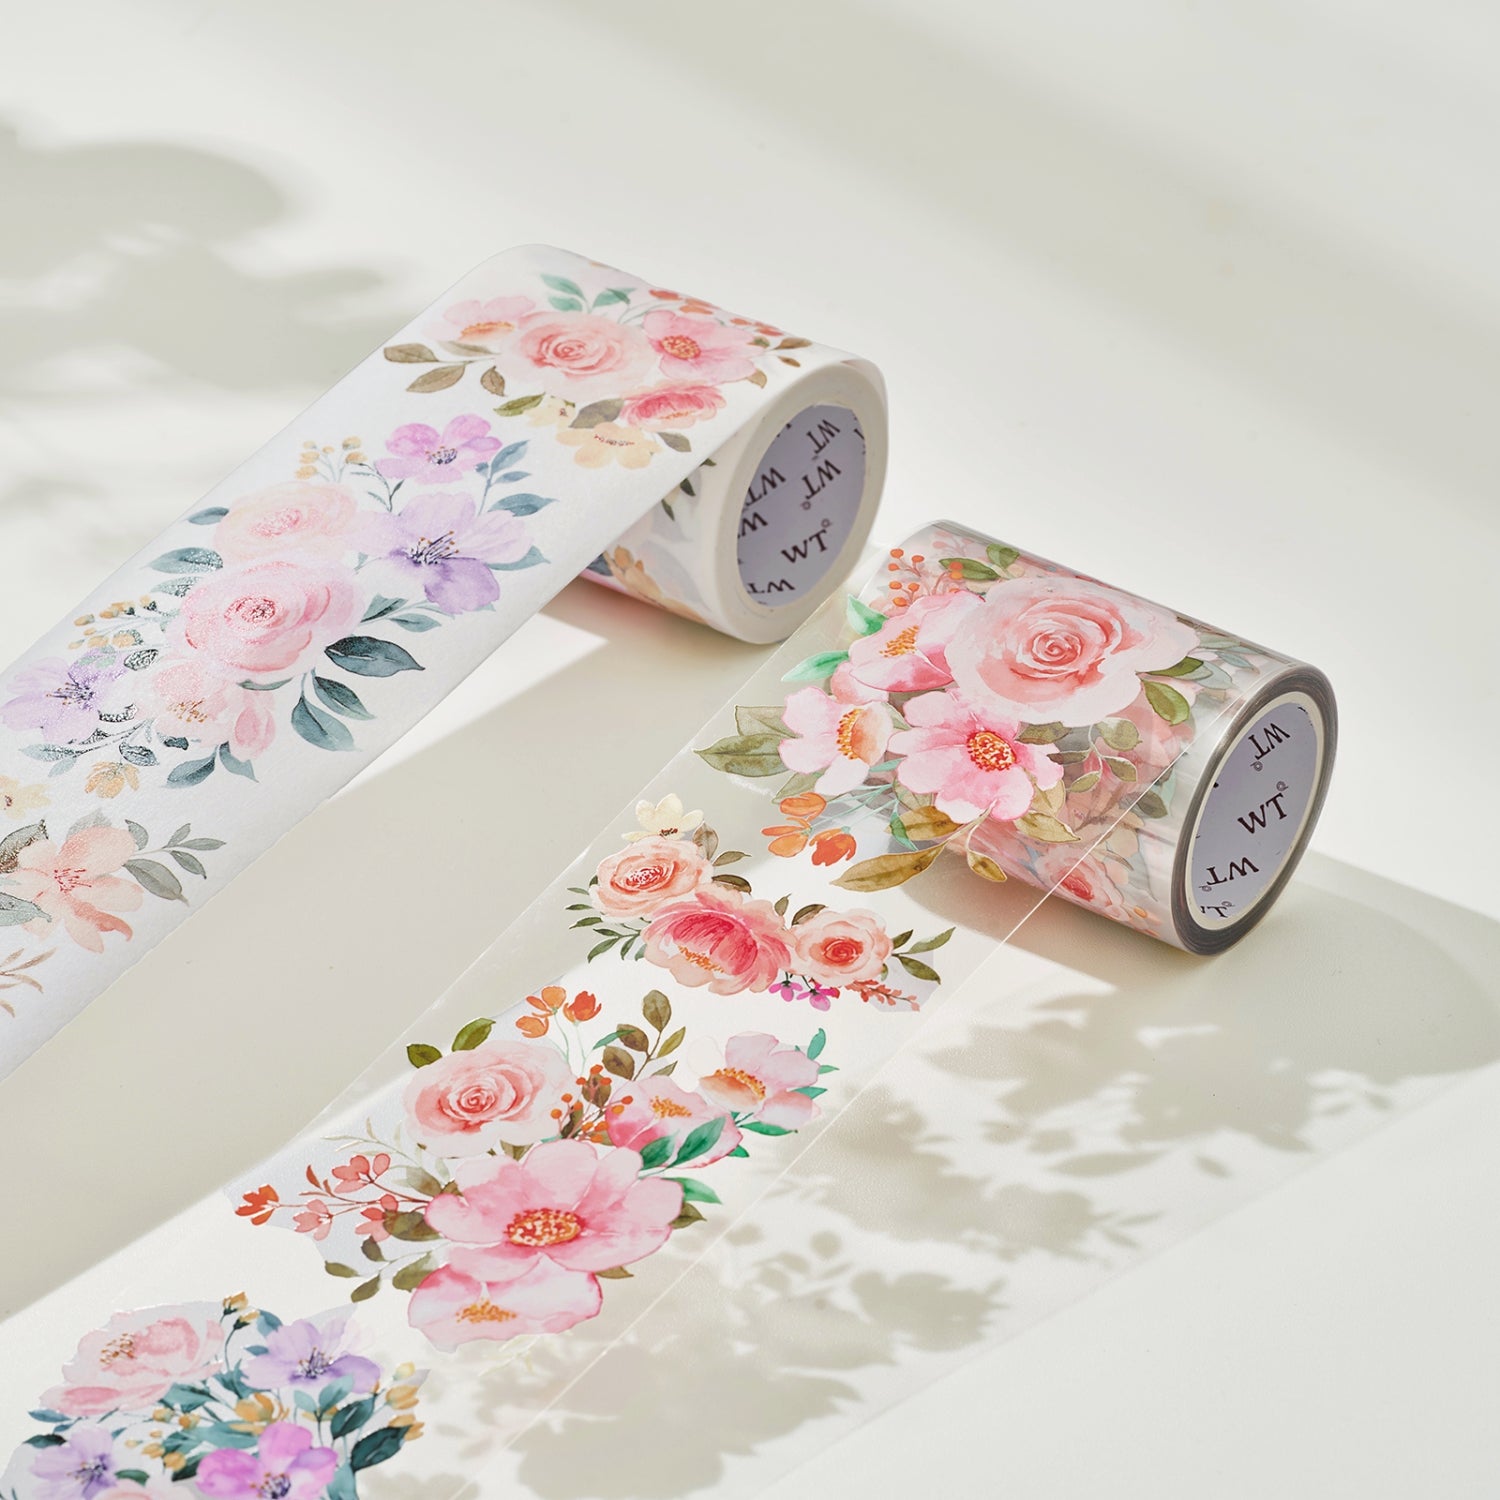 Floral Washi Tape, Eco Friendly Tape, Flowers, Stationery, Bullet Journal,  Planner, Masking Tape, Decorative Tape, Scrapbooking, Spring -  UK